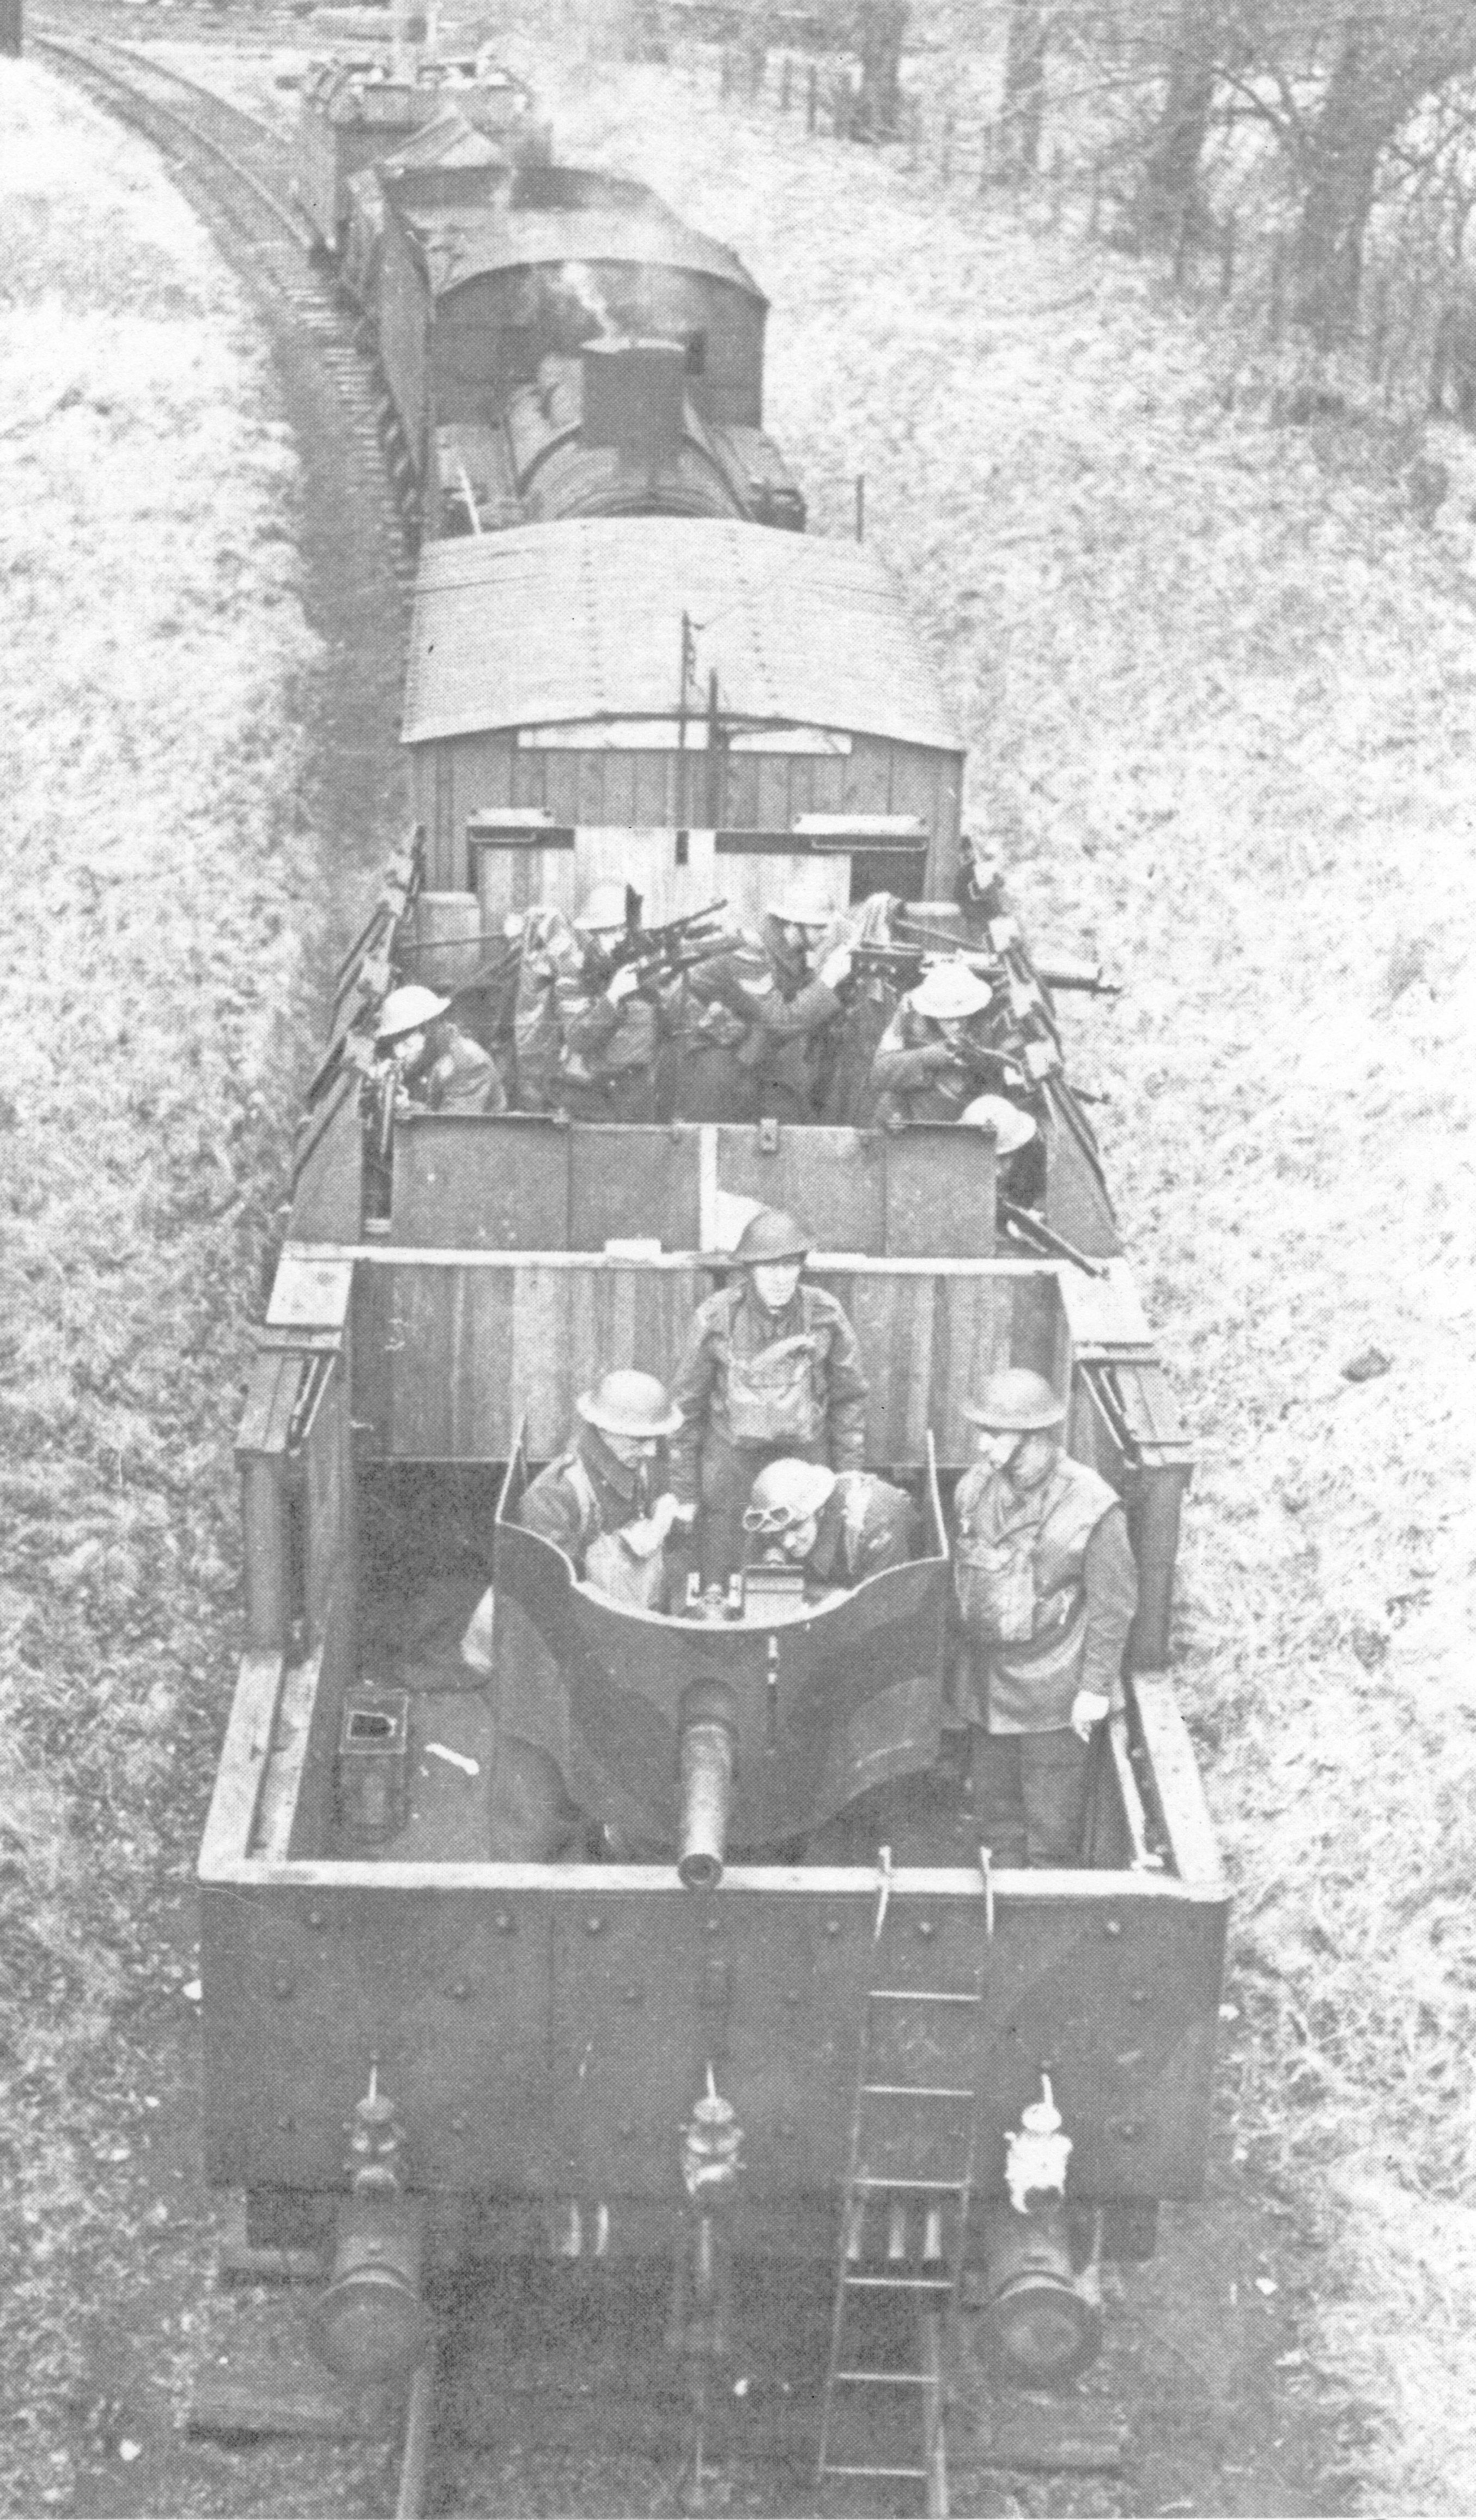 Armoured Train, manned.jpg